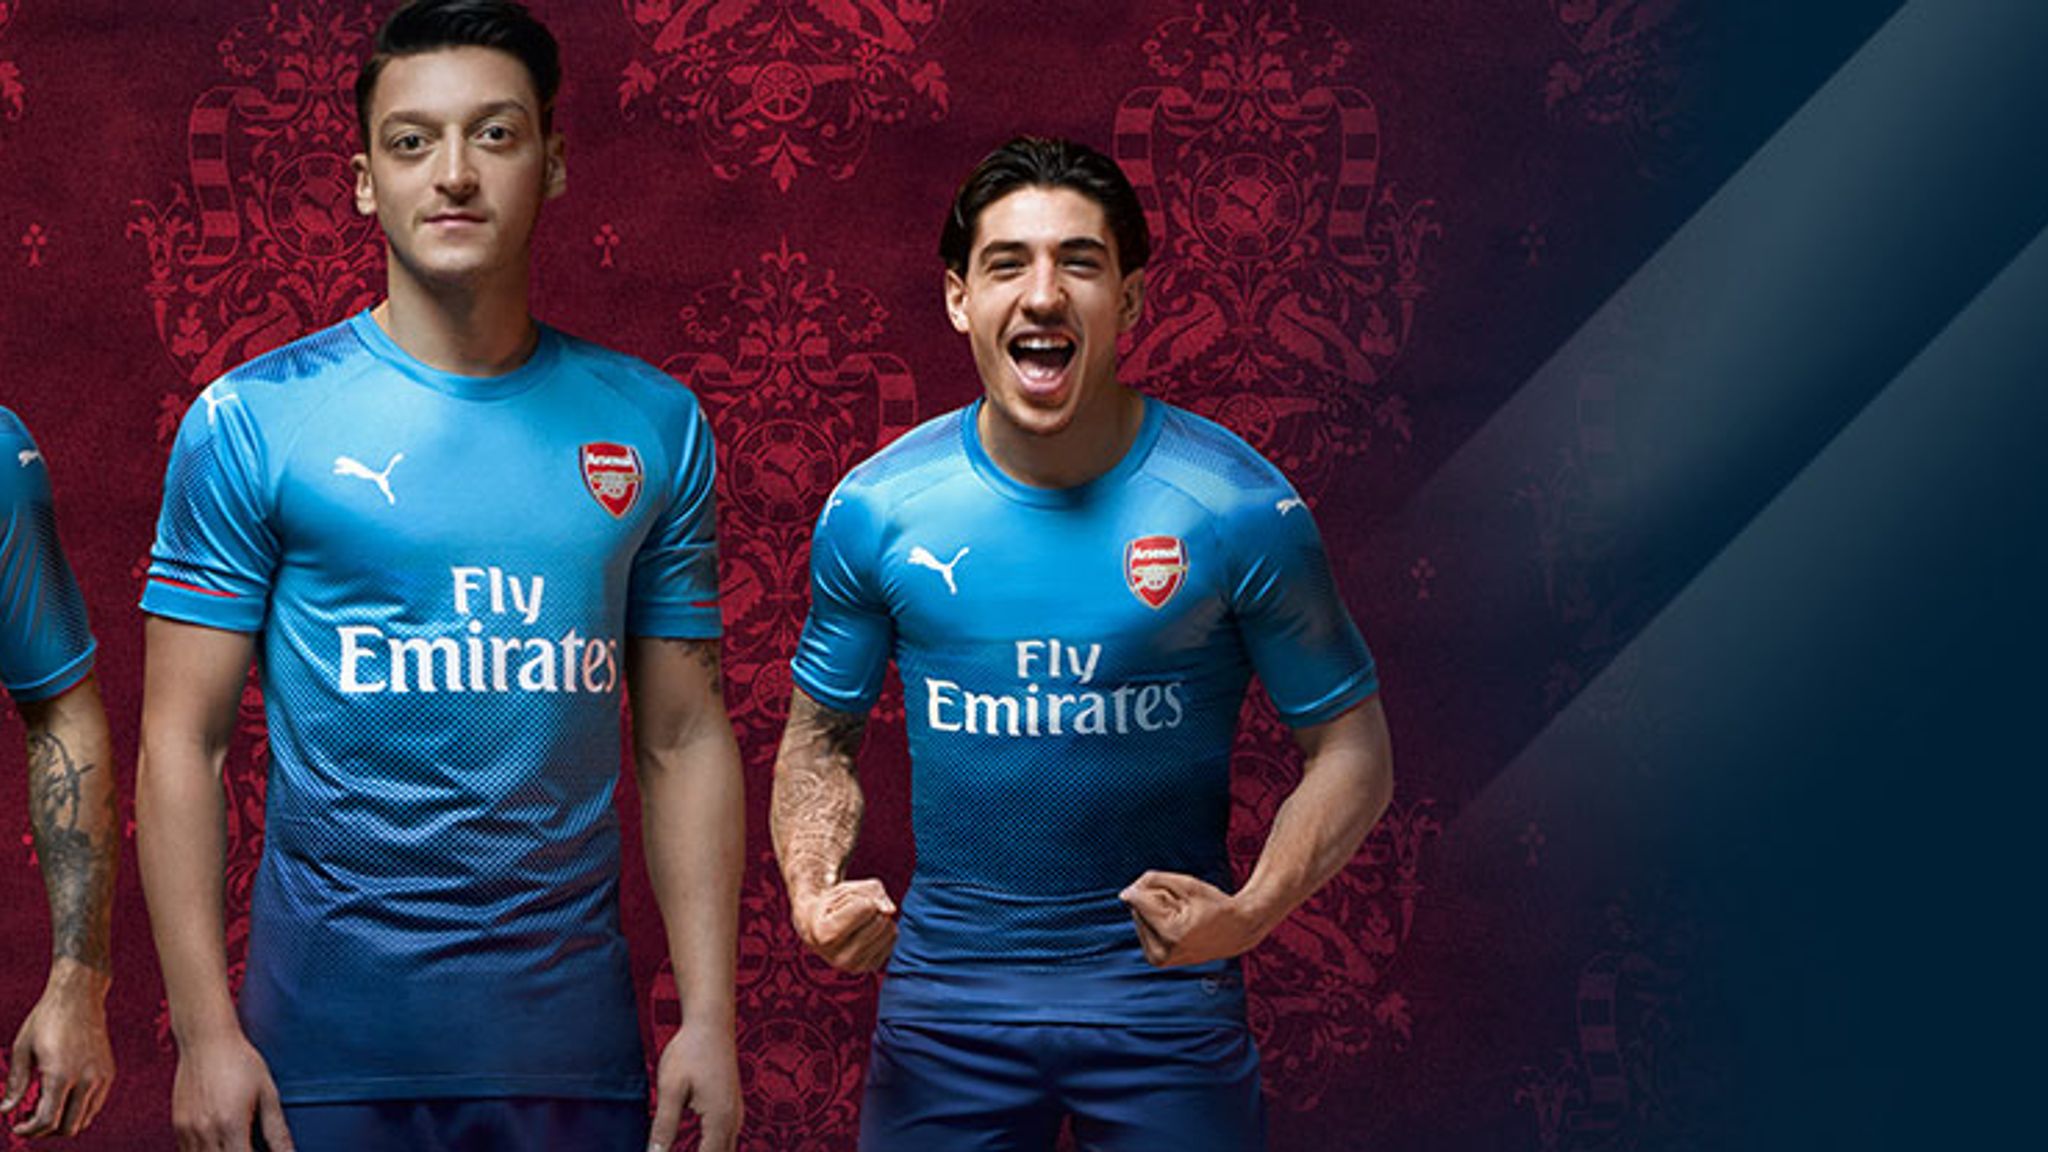 Arsenal Away Kit - Arsenal Launch Their Away Kit For The ...